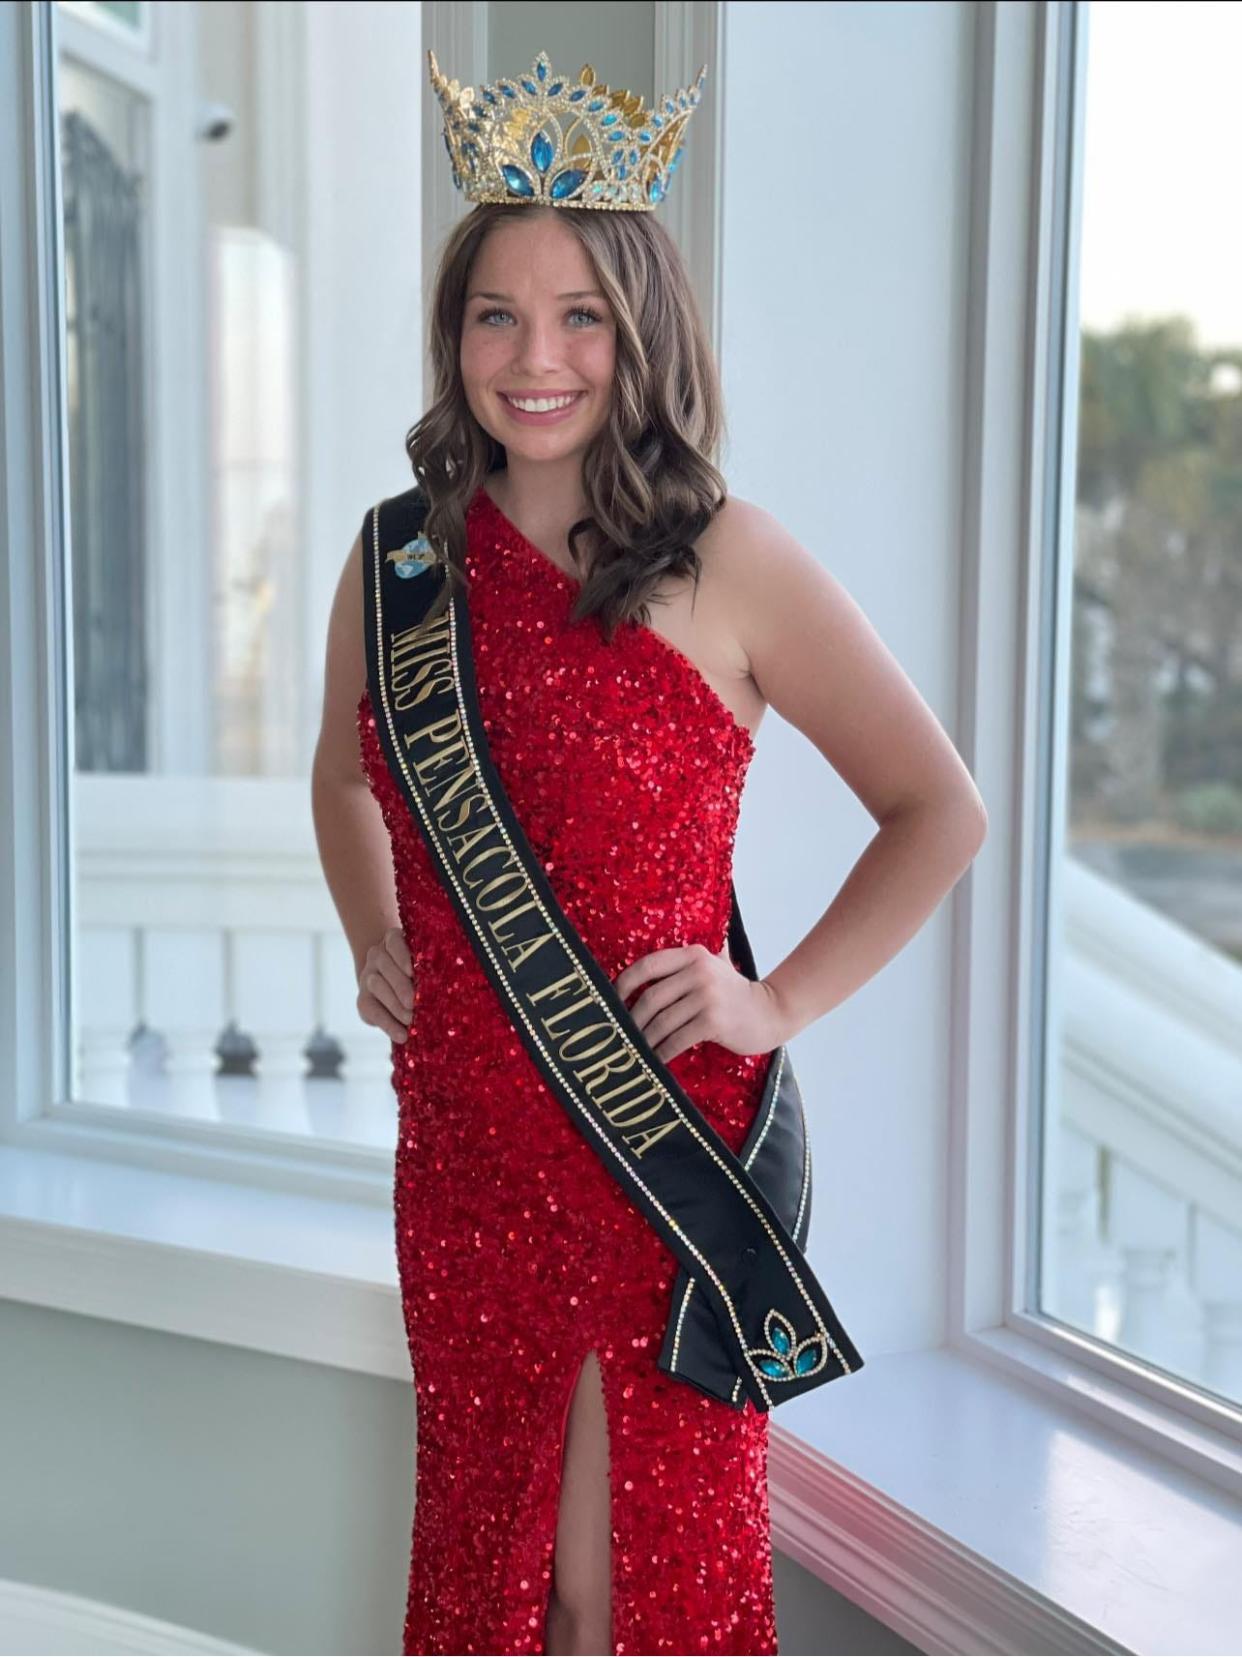 Lauren Adams was selected as Miss Pensacola in September.